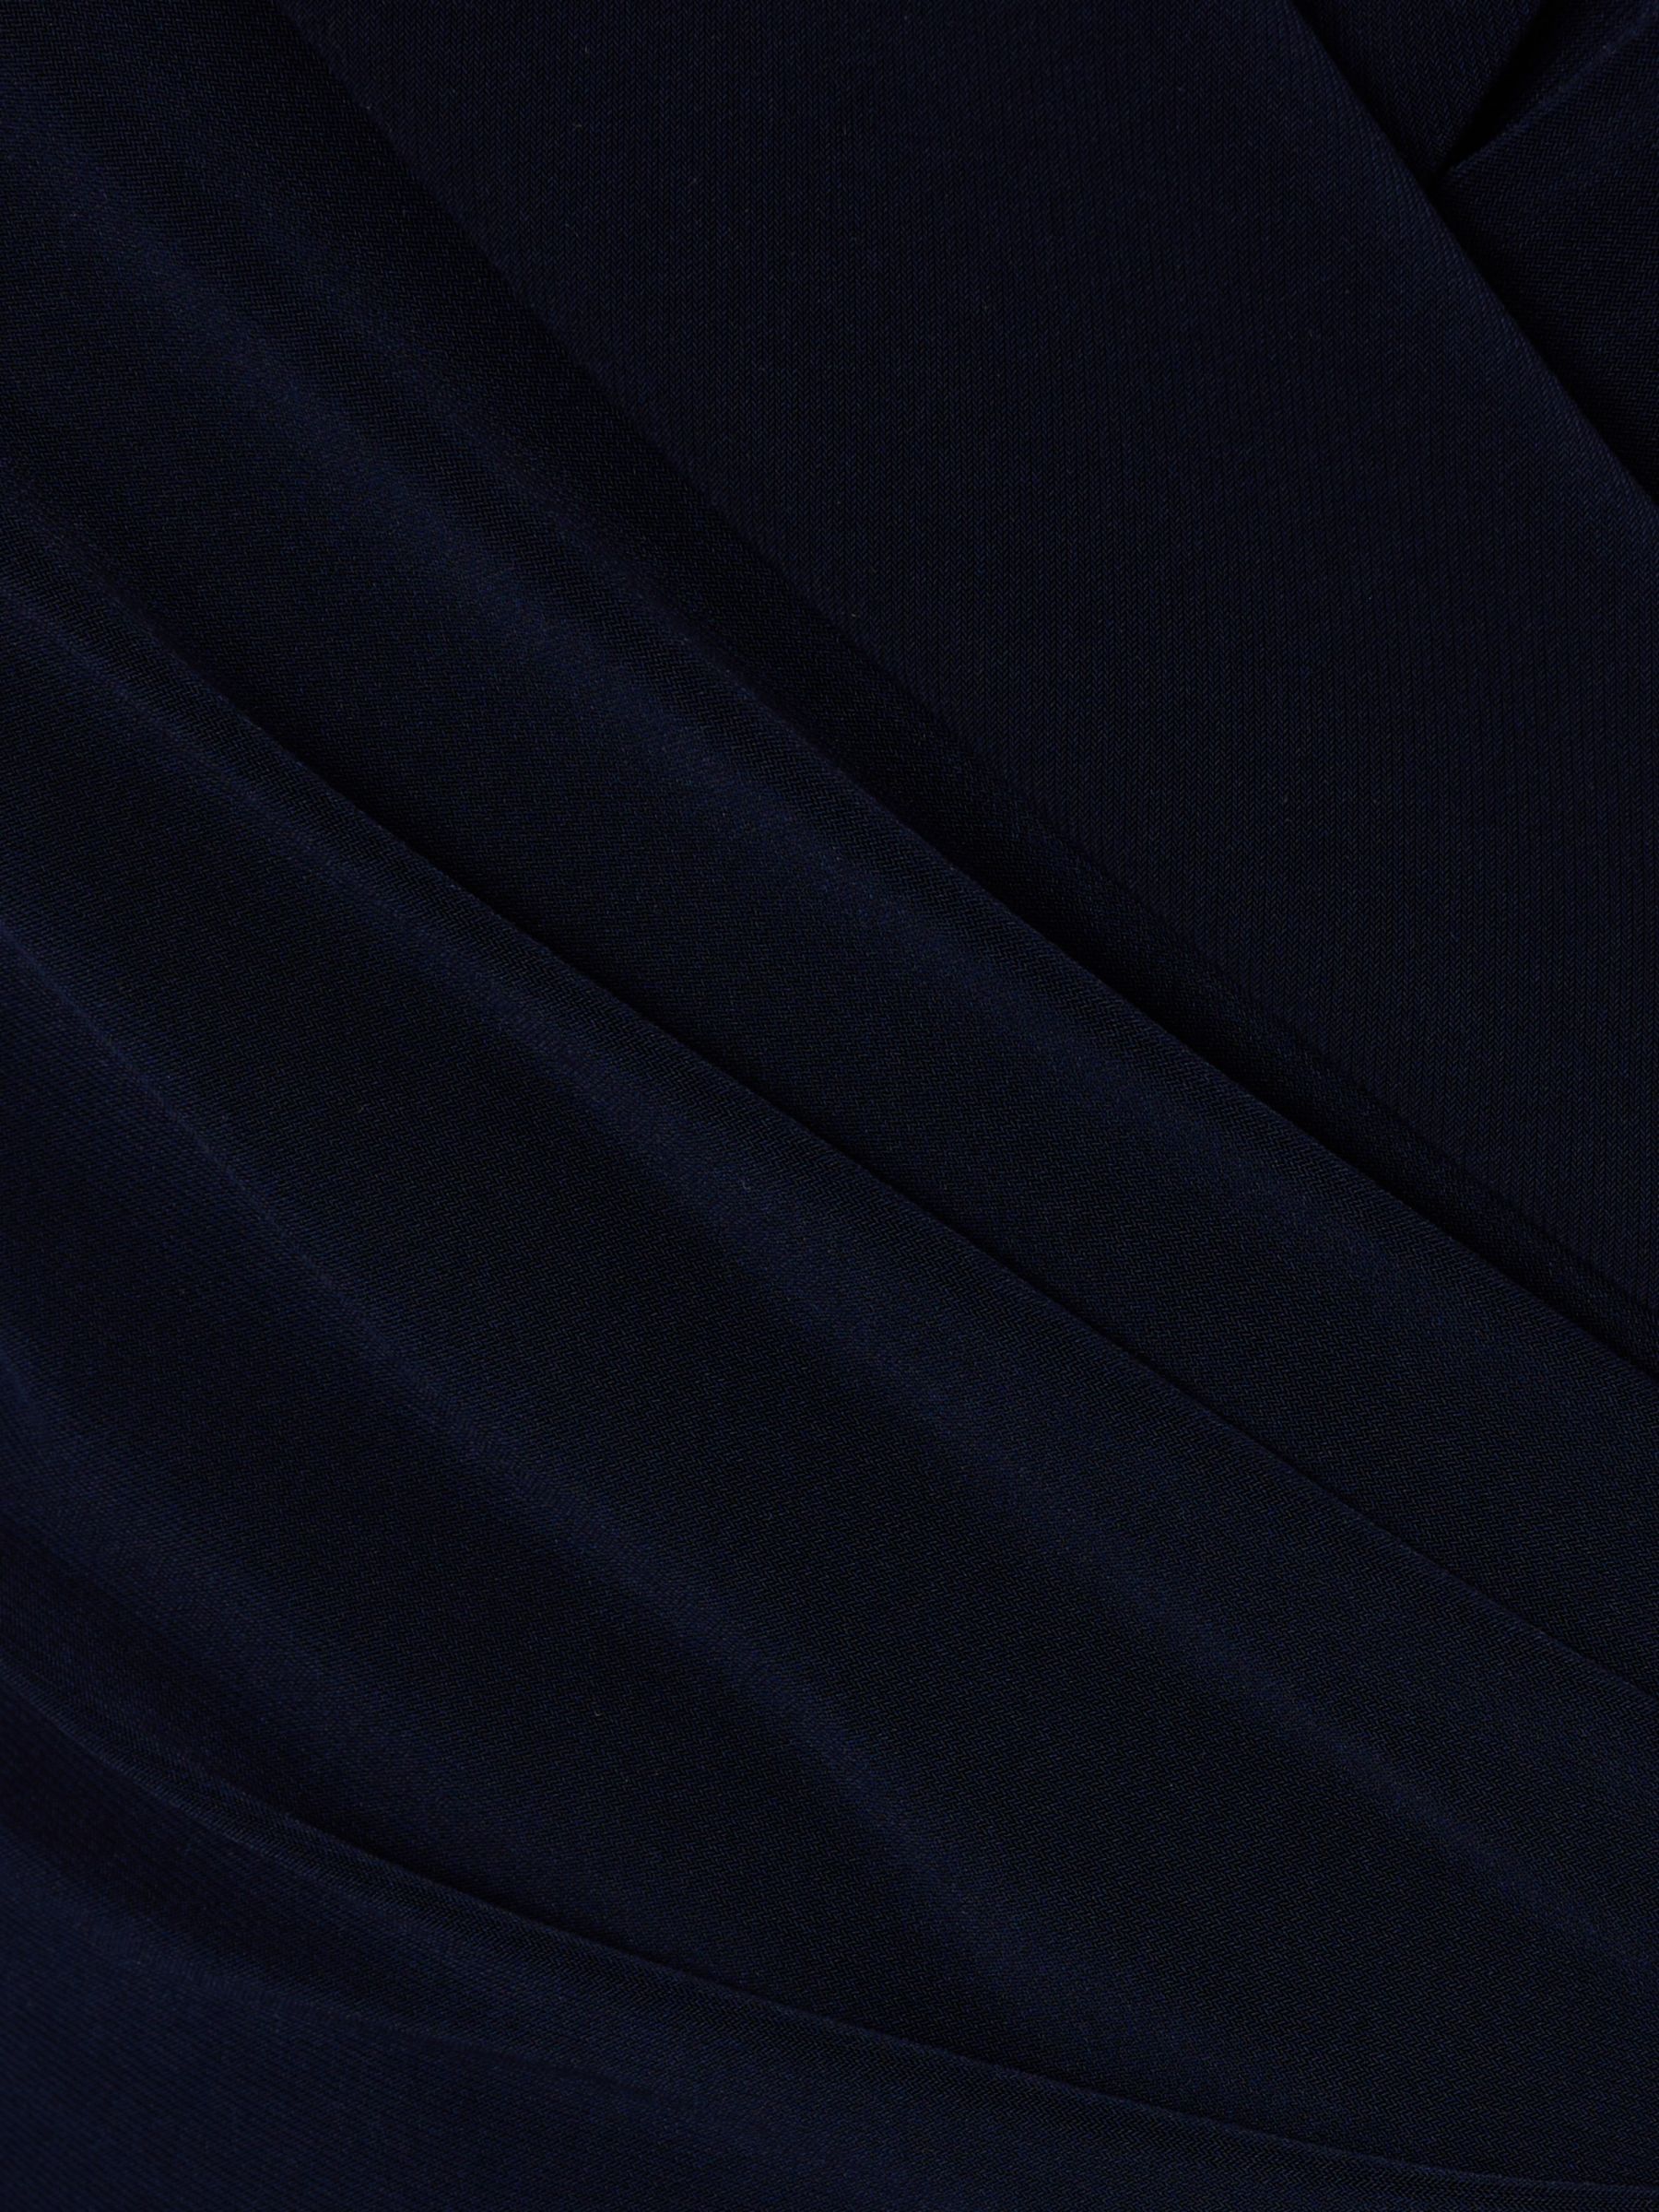 Adrianna Papell Embellished Tuxedo Jersey Jumpsuit, Midnight, 6